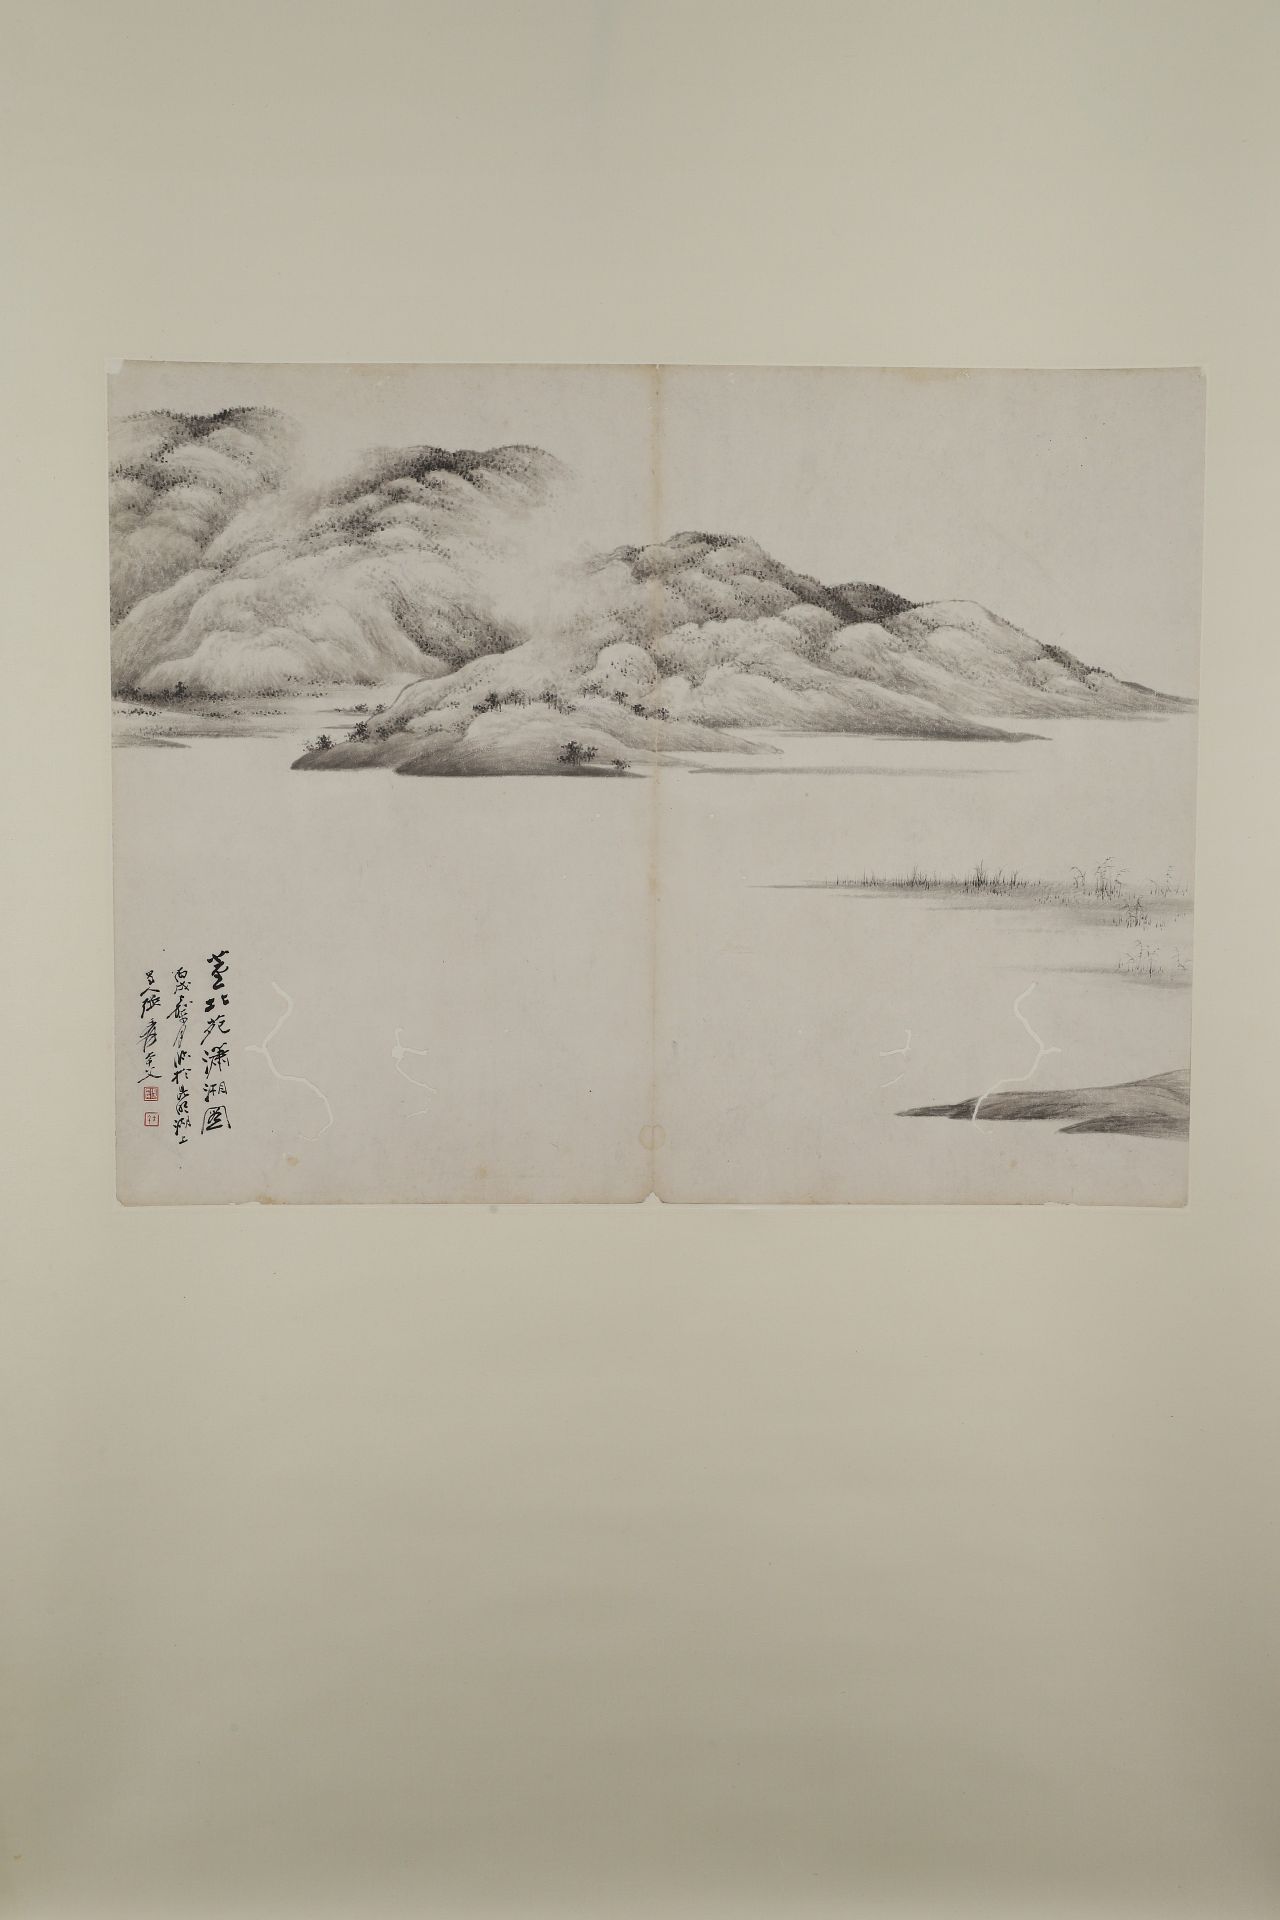 ZHANG DA QIAN (1899-1983) 张大千(1899-1983), 张大千





这幅画是张大千1946年临摹的董源的《潇湘图》。张大千善于&hellip;